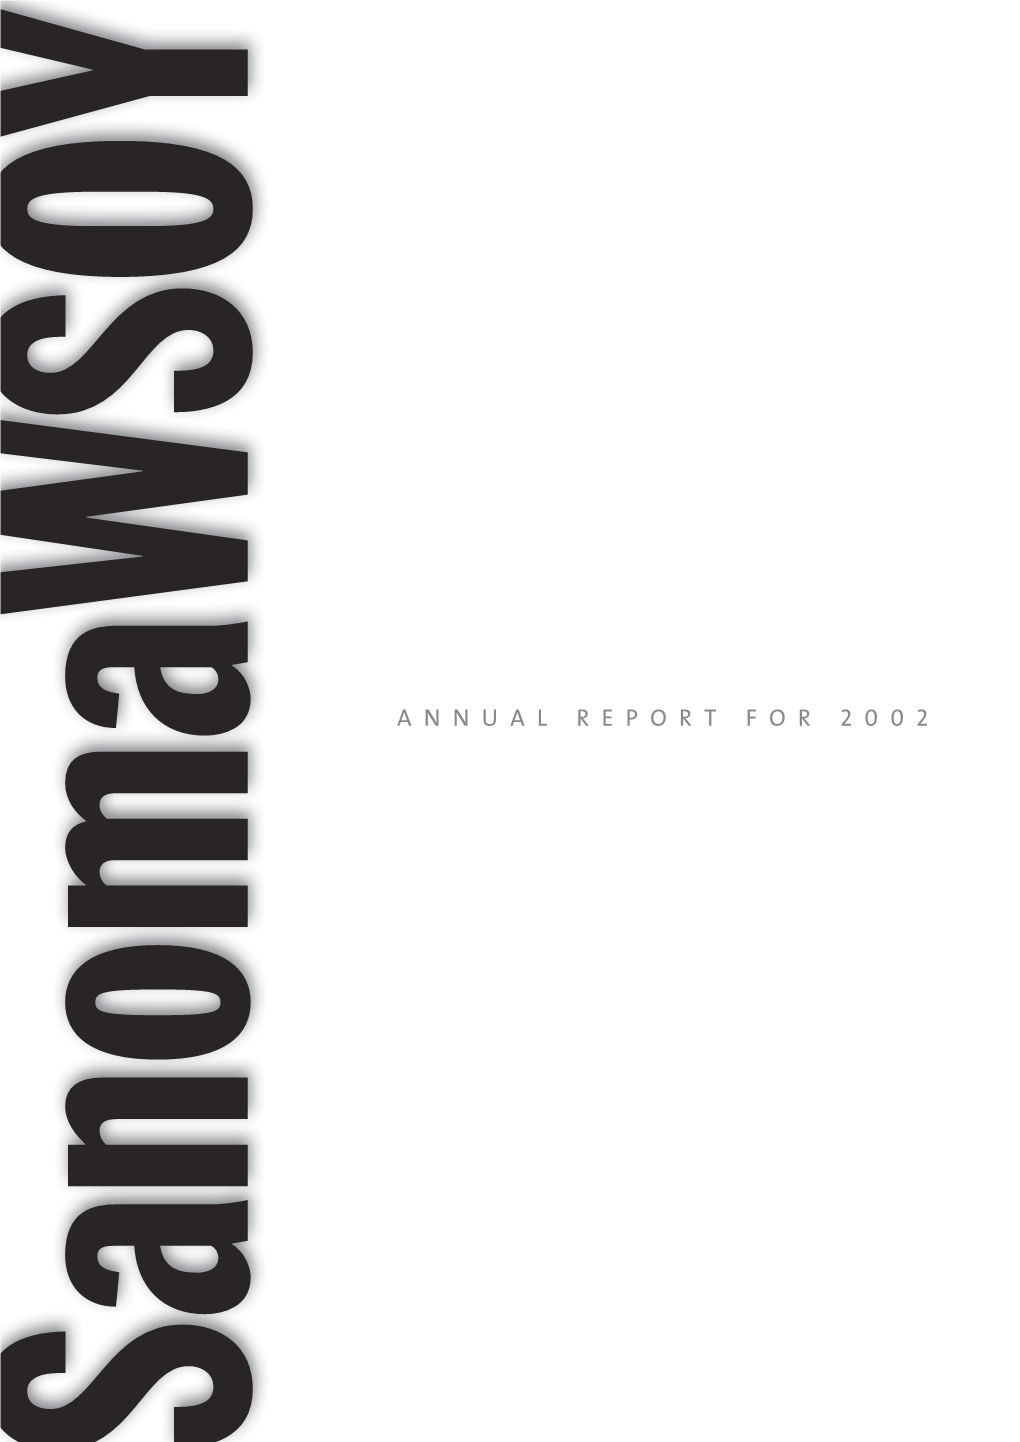 Sanomawsoy Annual Report 2002